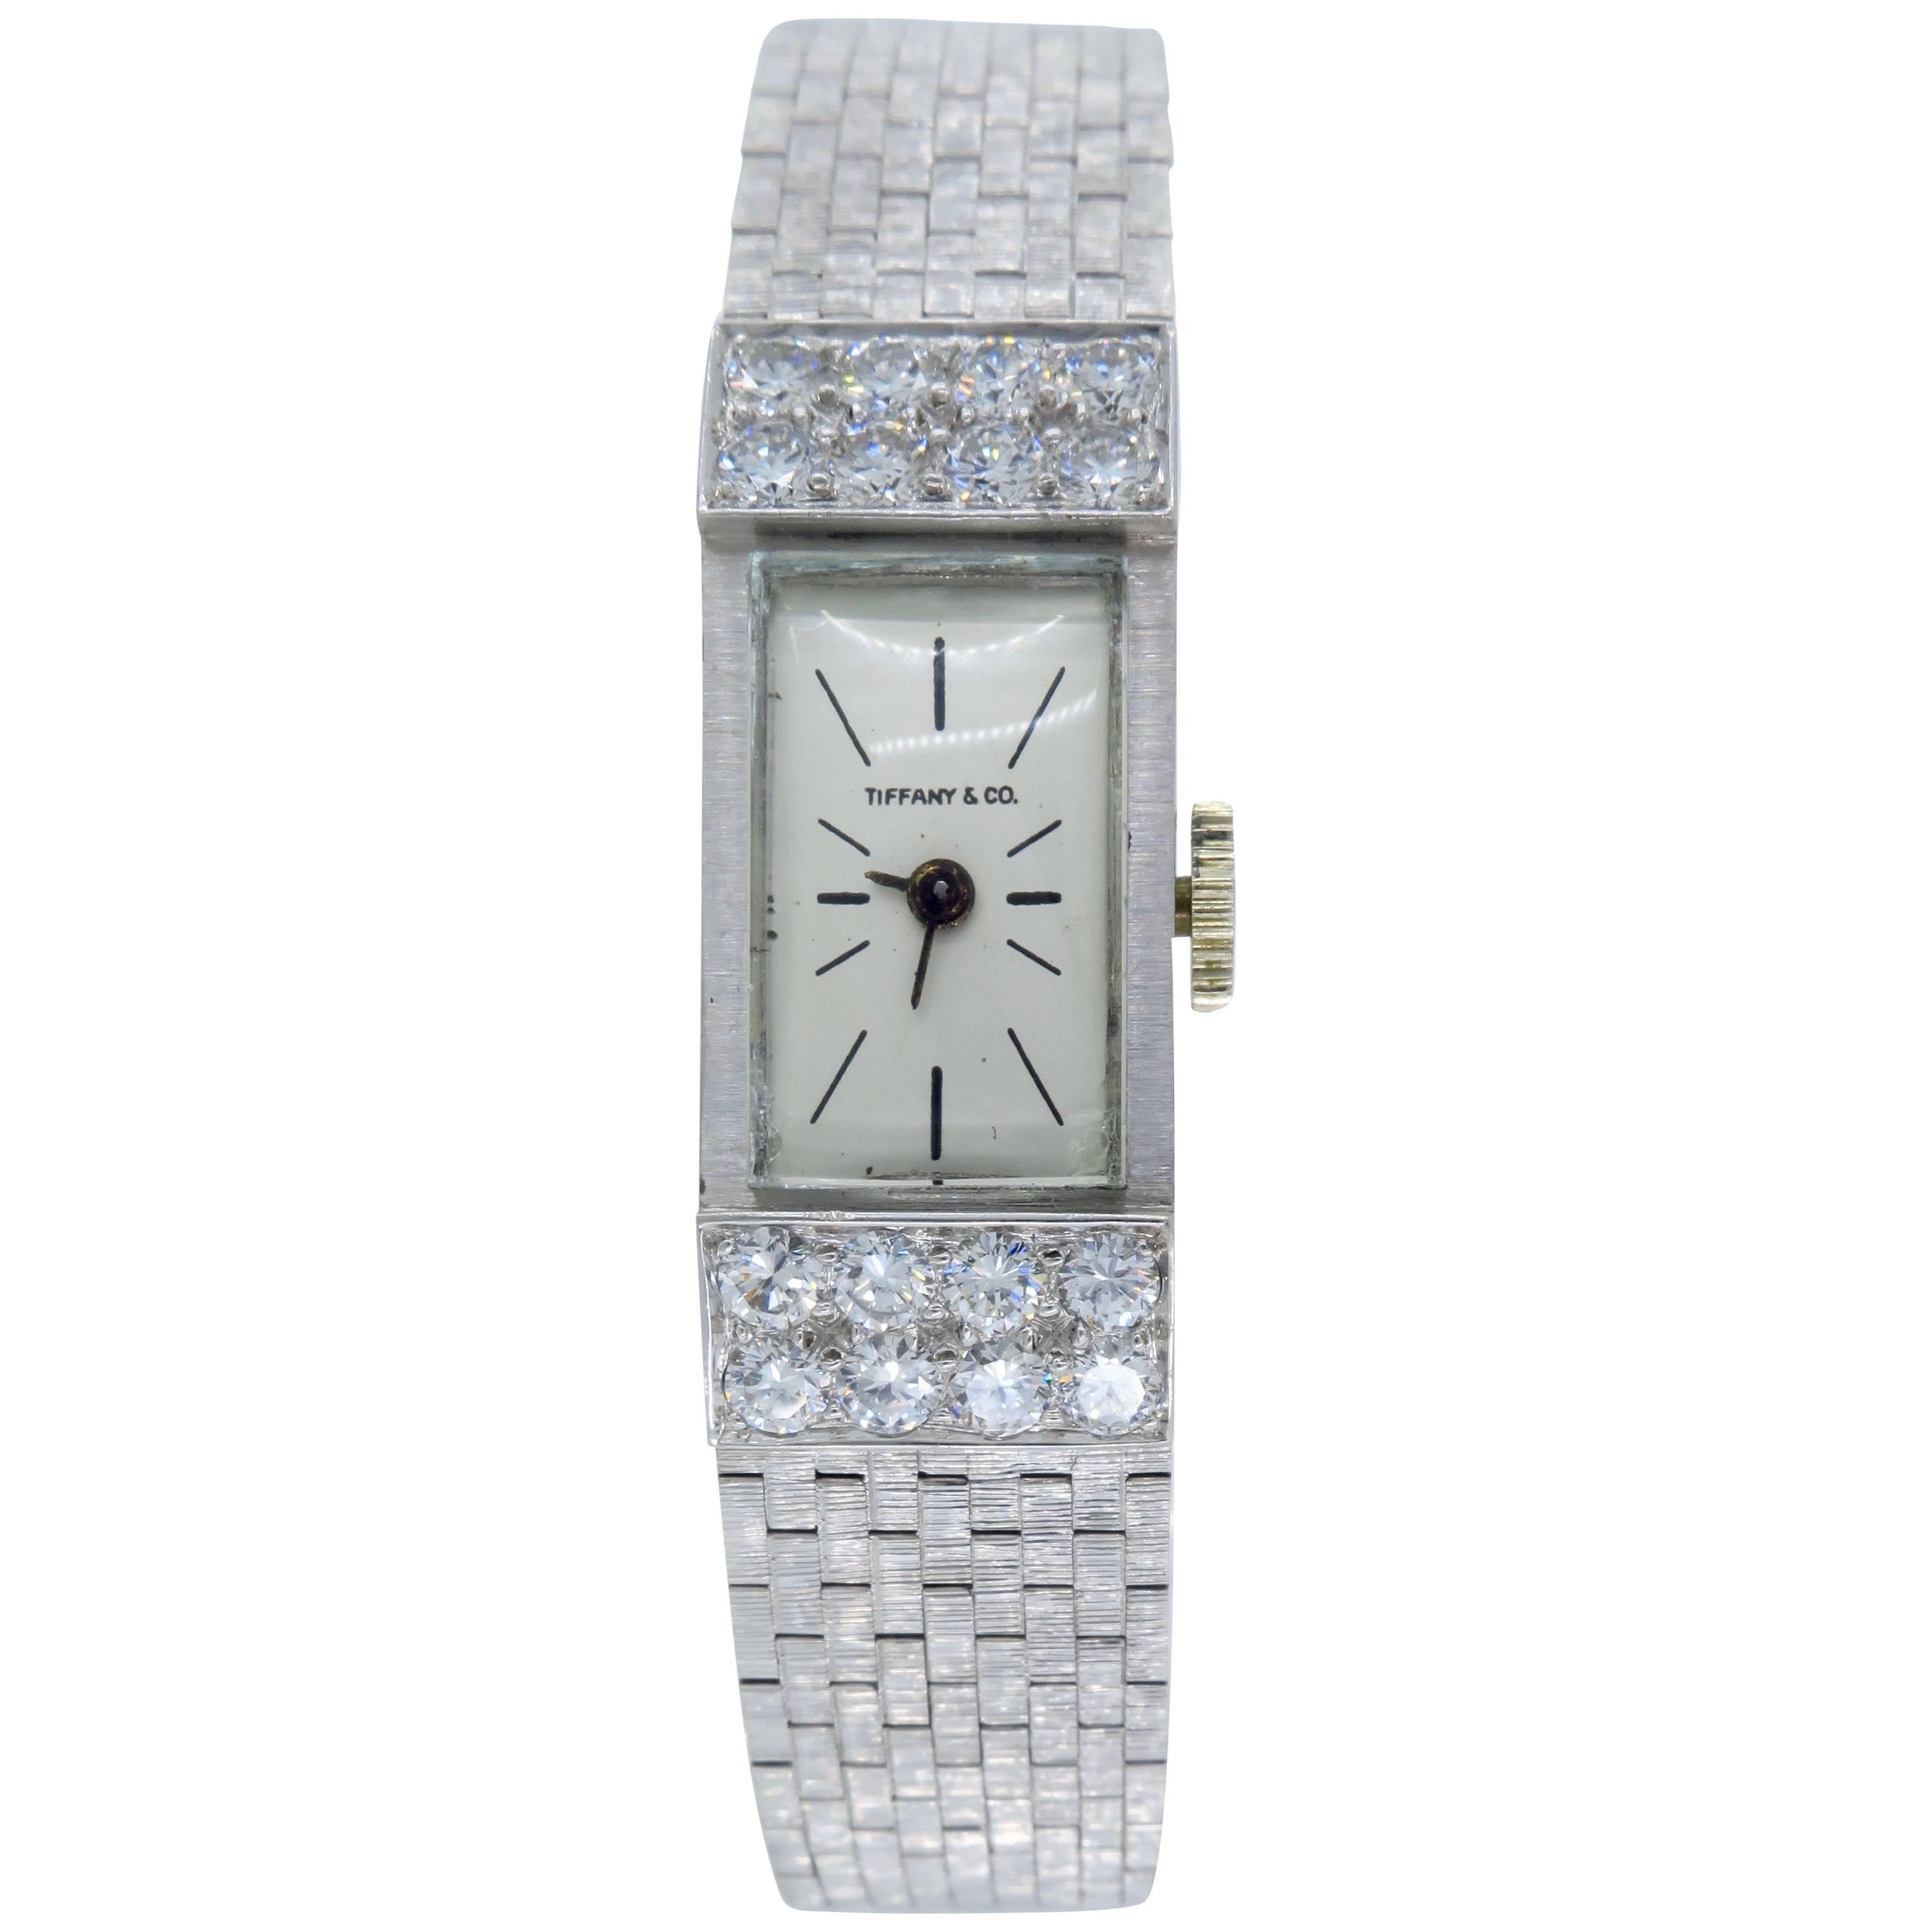 Tiffany & Co. 14 Karat White Gold Diamond Watch